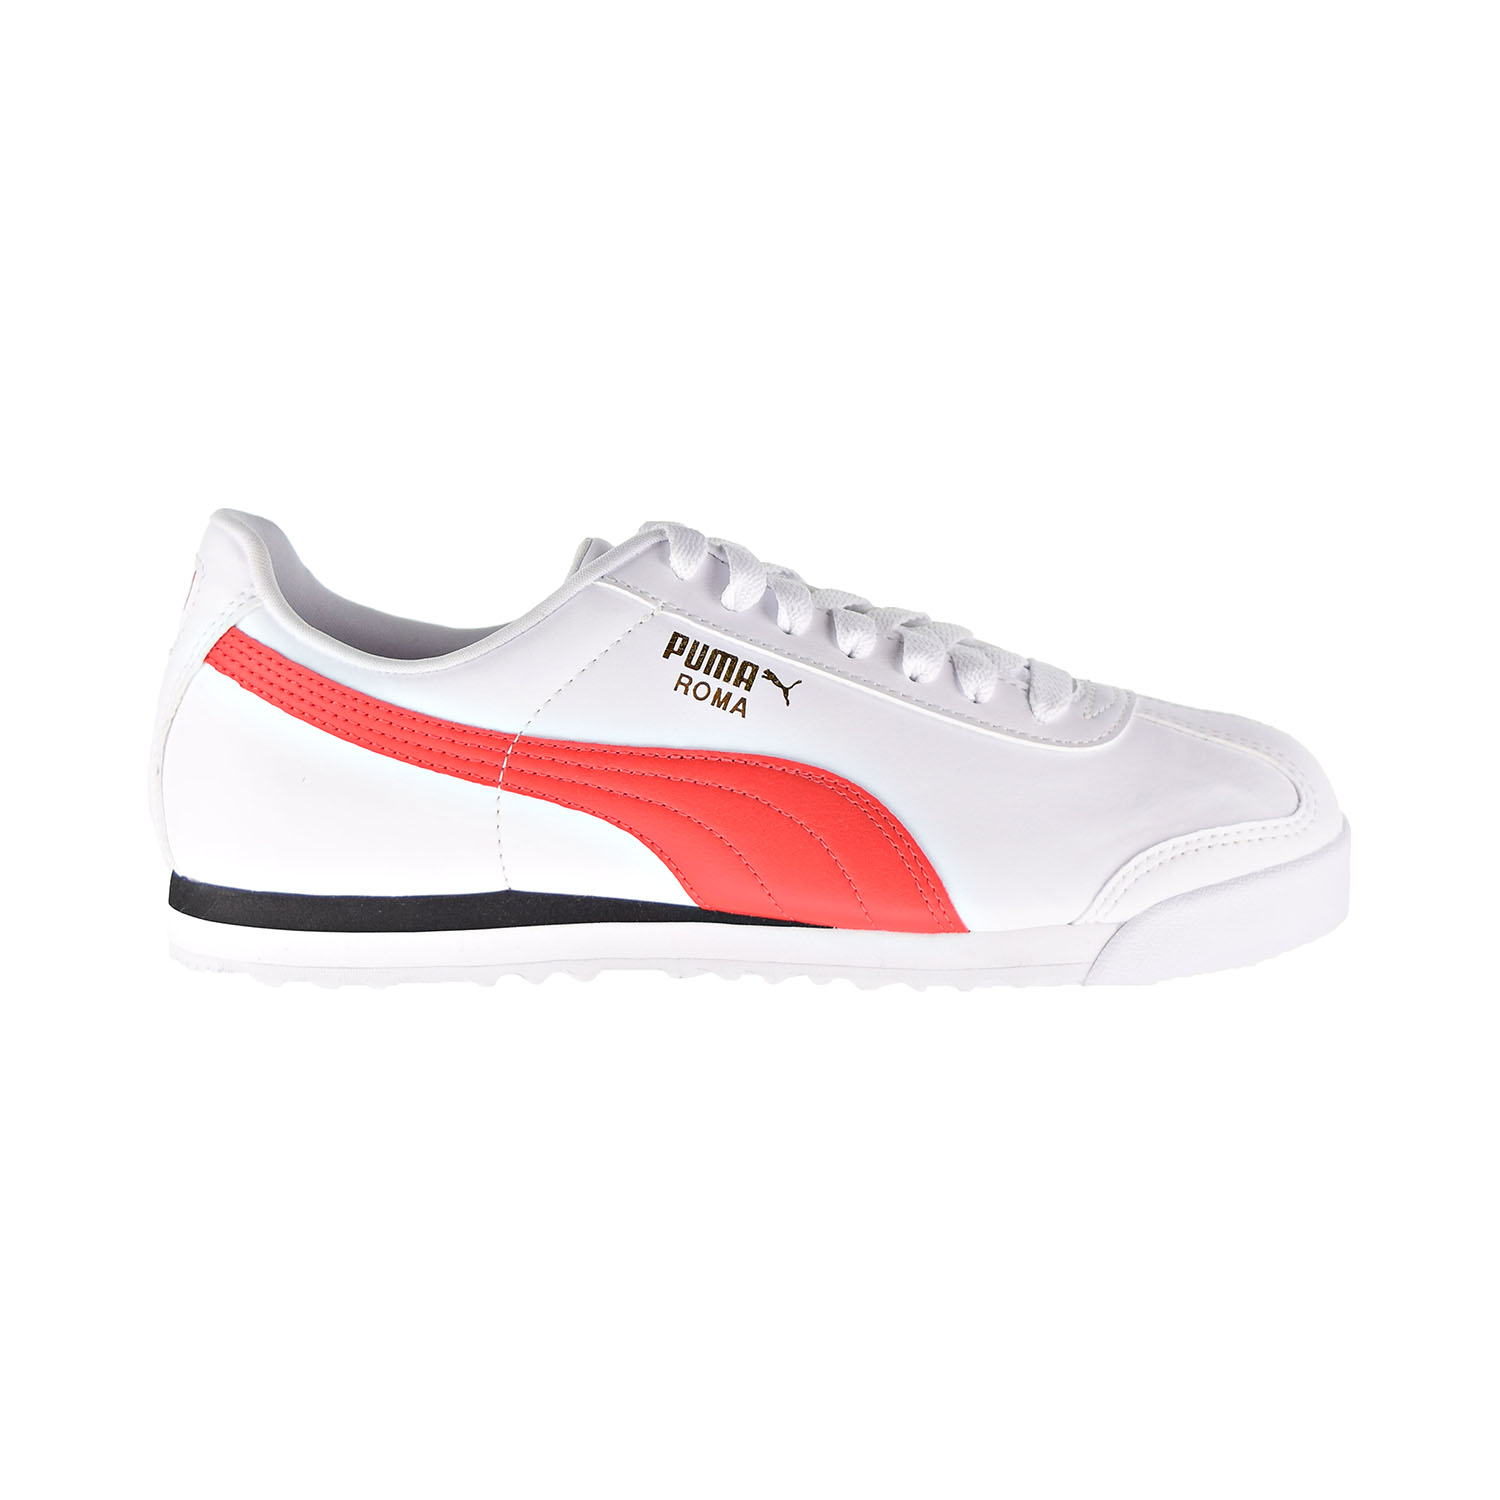 Puma Roma Basic+ Men's Shoes Puma White-High Risk Red 369571-11 - image 1 of 6